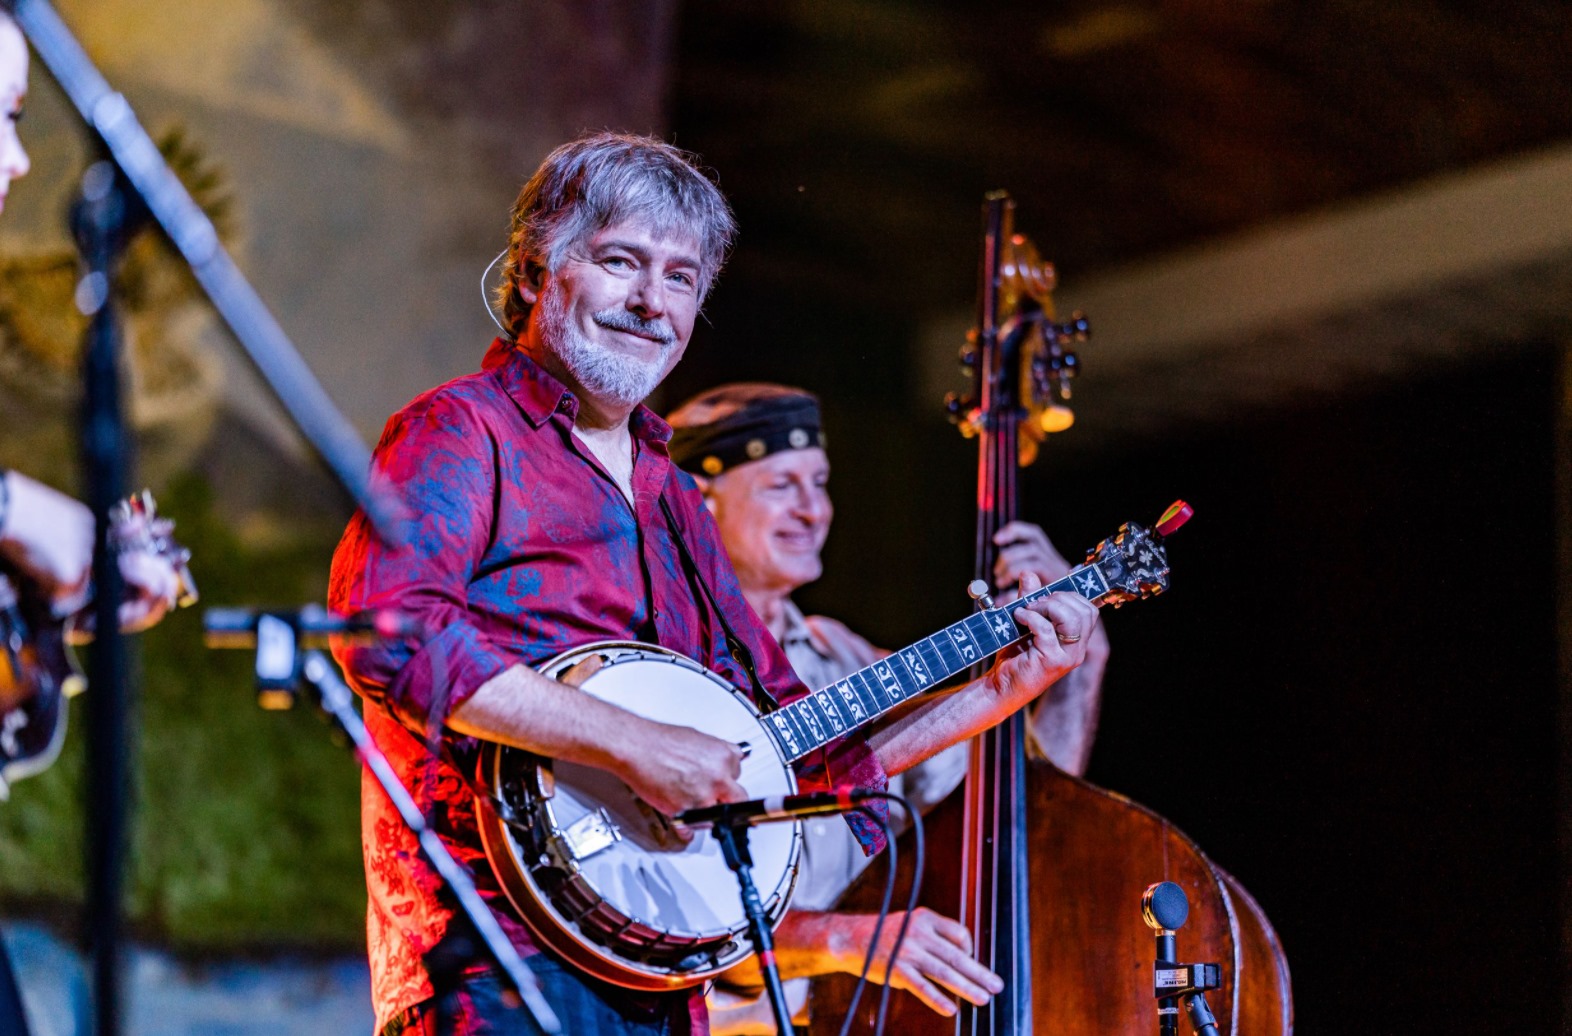 Béla Fleck & My Bluegrass Heart, Sam Bush and The Jerry Douglas Band at Ravinia Festival